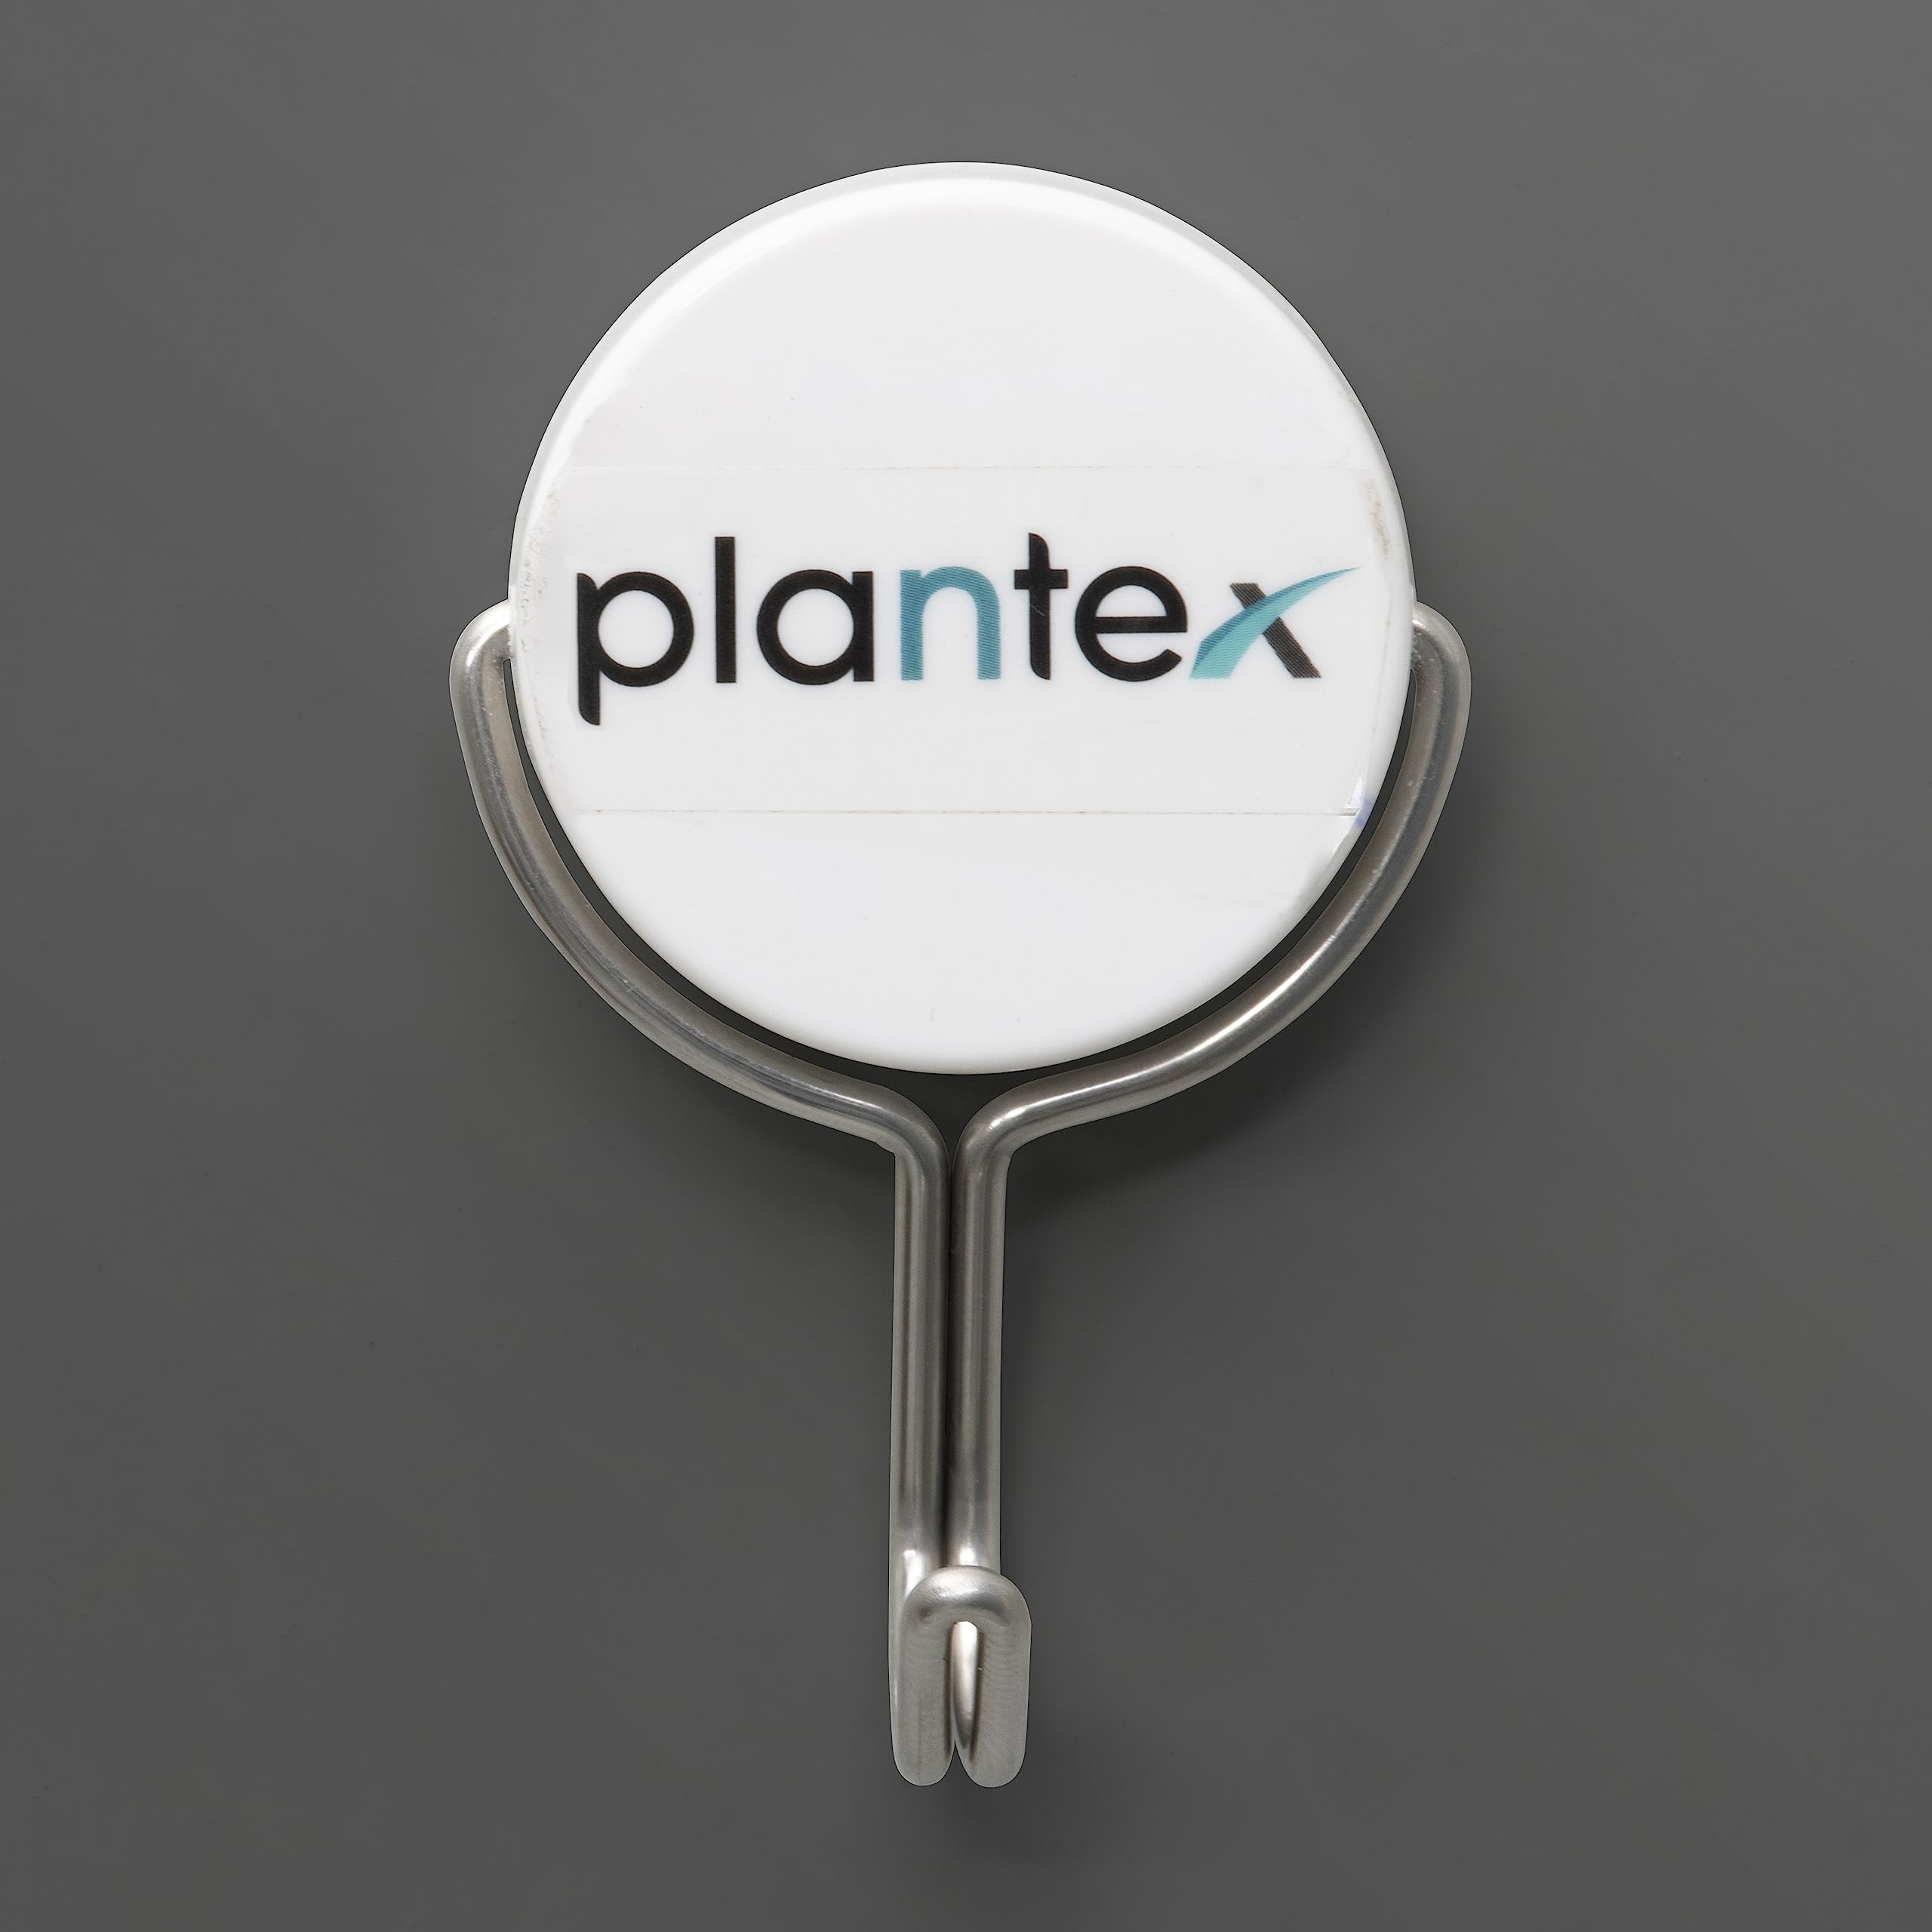 Plantex Stainless Steel Magnetic Rotating Hook for Bathroom/Cloth Hanger/Towel Hanger Hook for Behind Door -Pack of 5 (White)